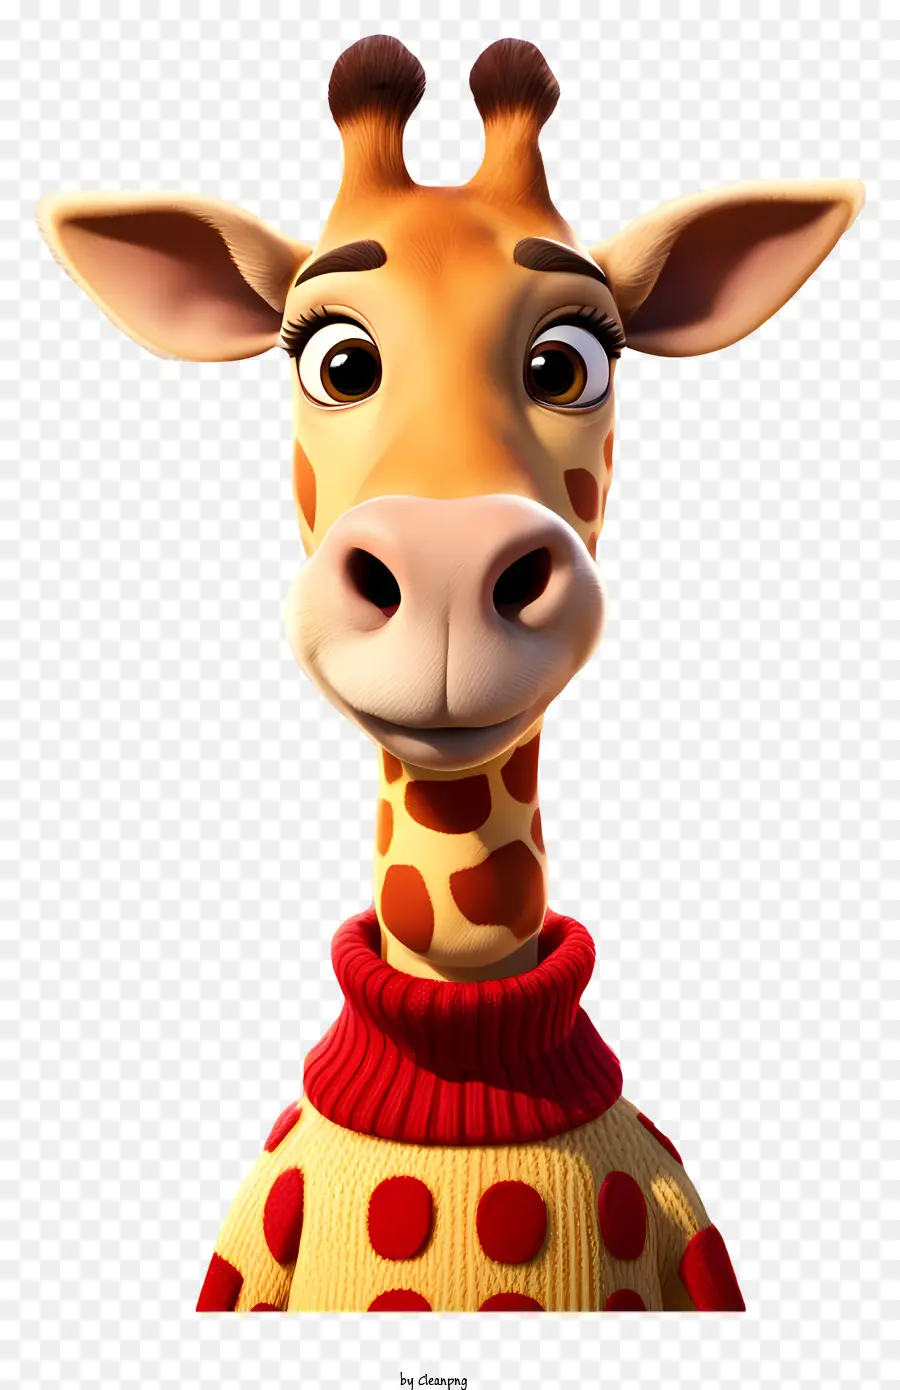 giraffe cartoon sweater smiling expression closed eyes